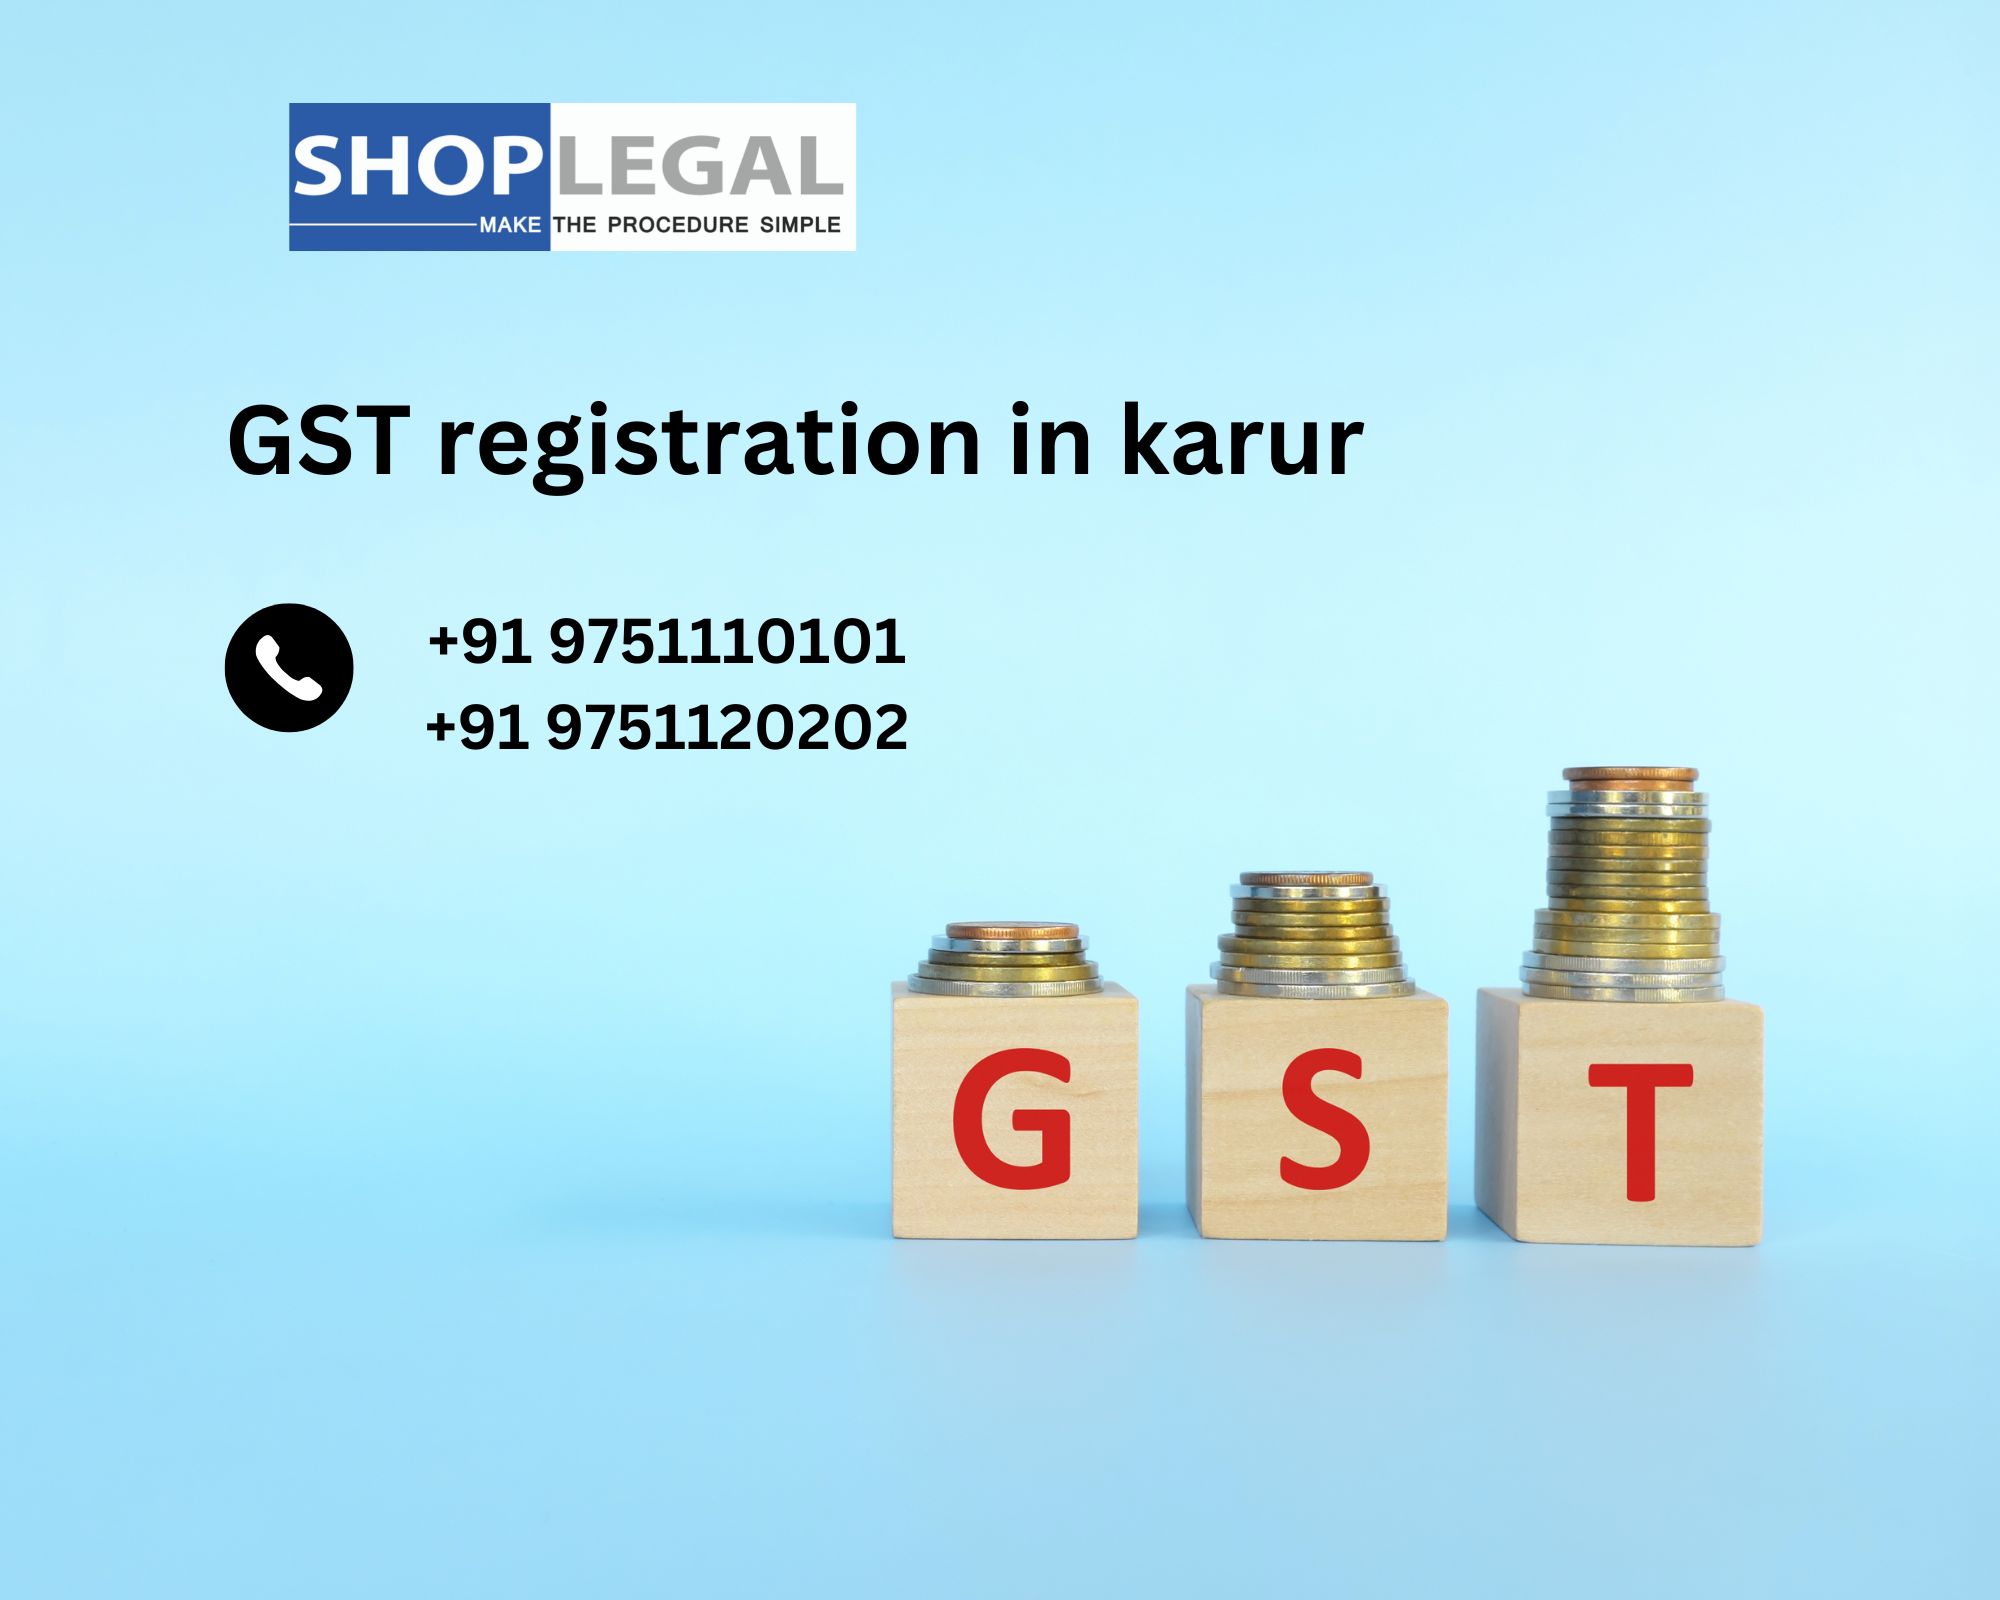 GST registration in karur